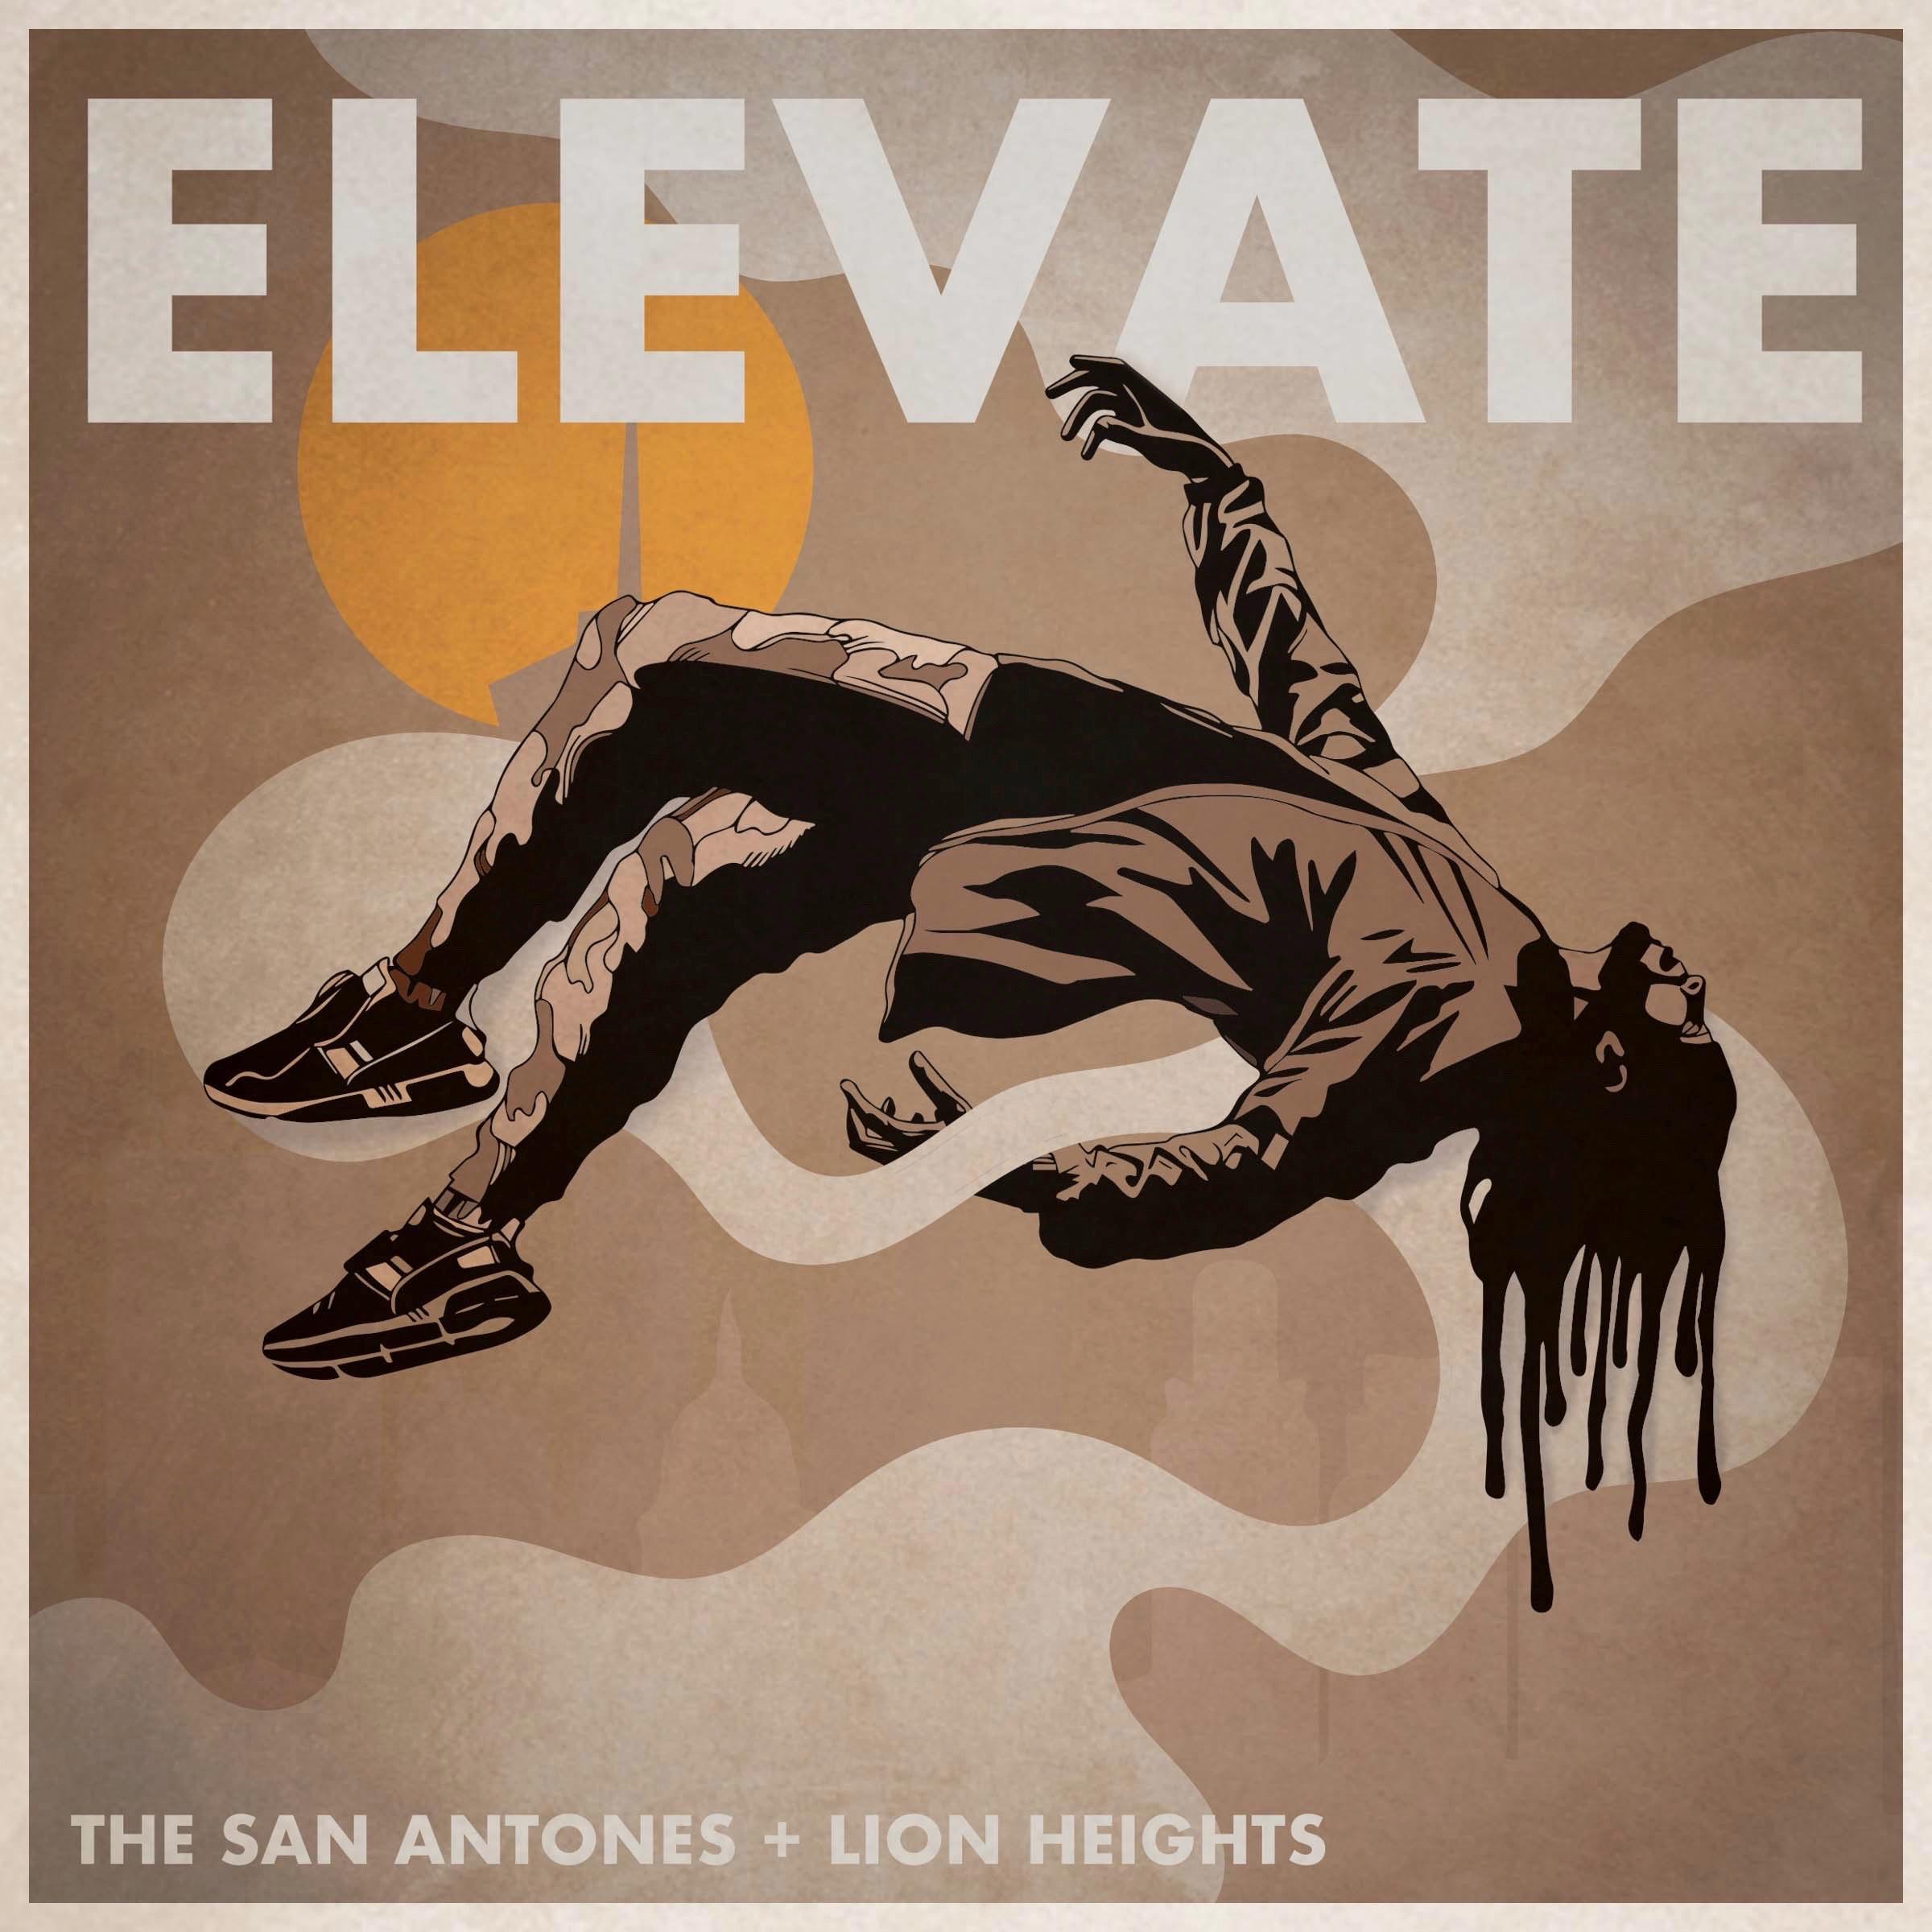 The San Antones - Elevate